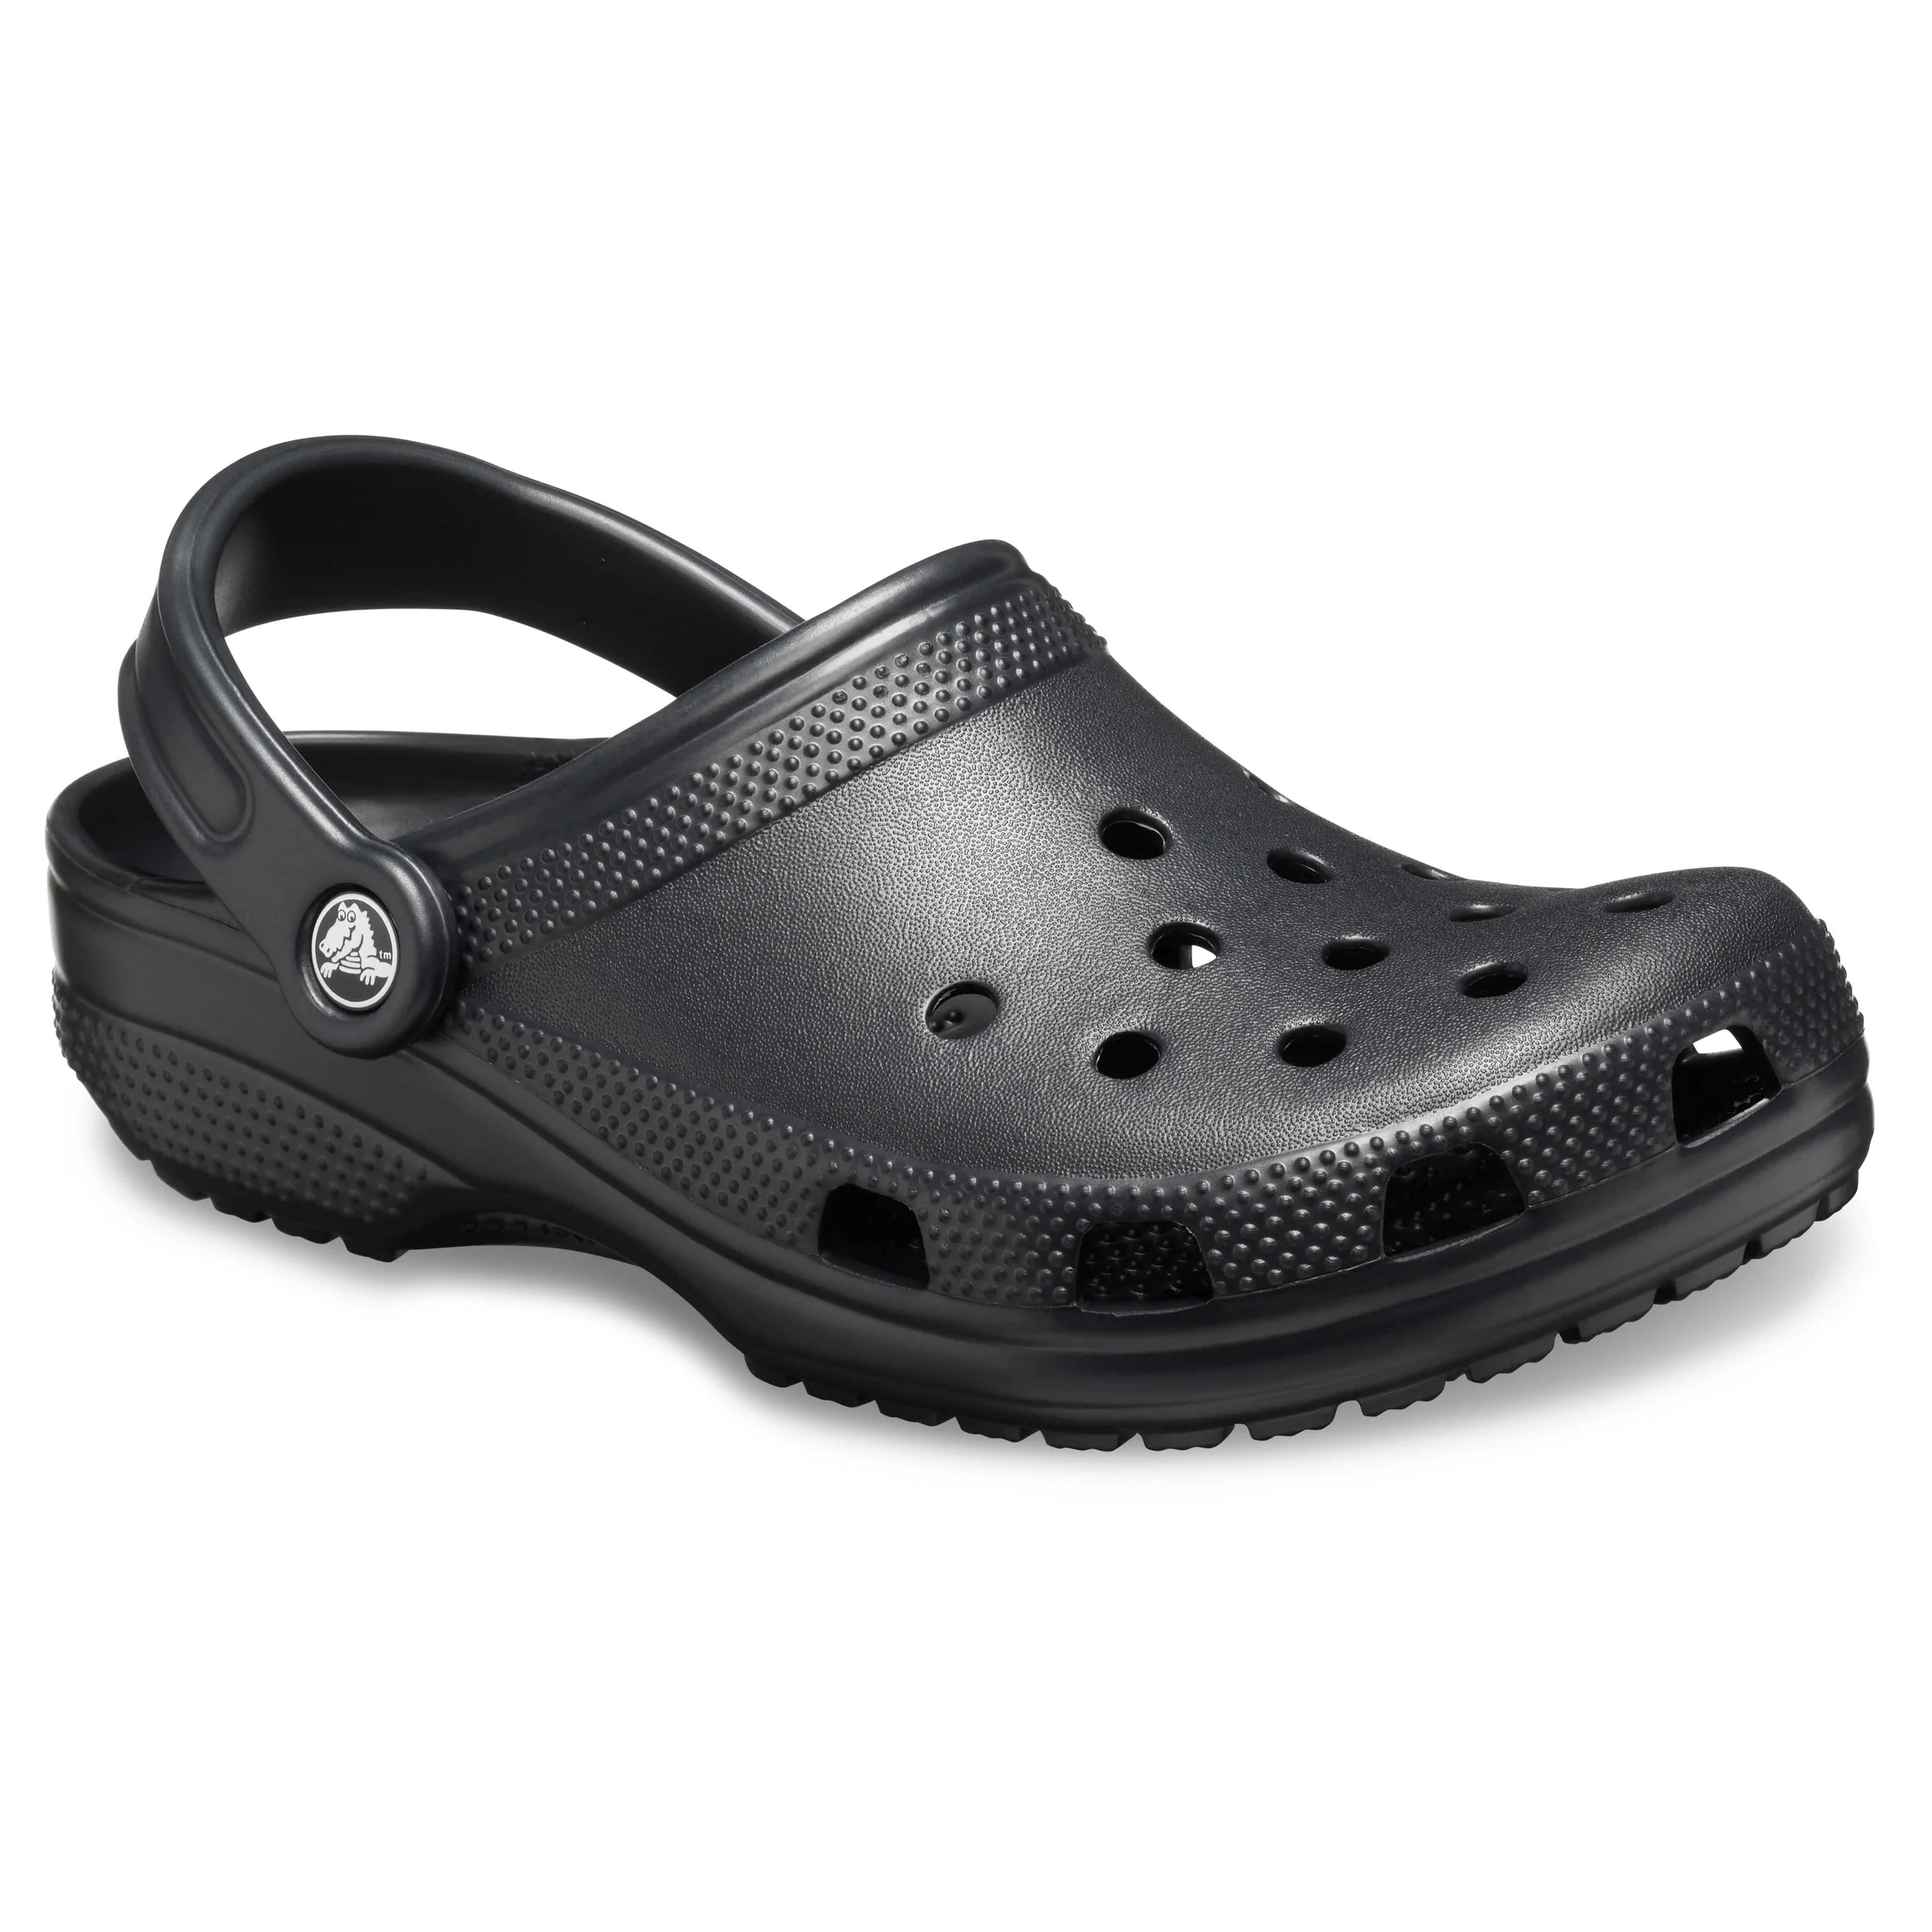 Classic Clog Toddlers - shoe&amp;me - Crocs - Clog - Crocs, Kids